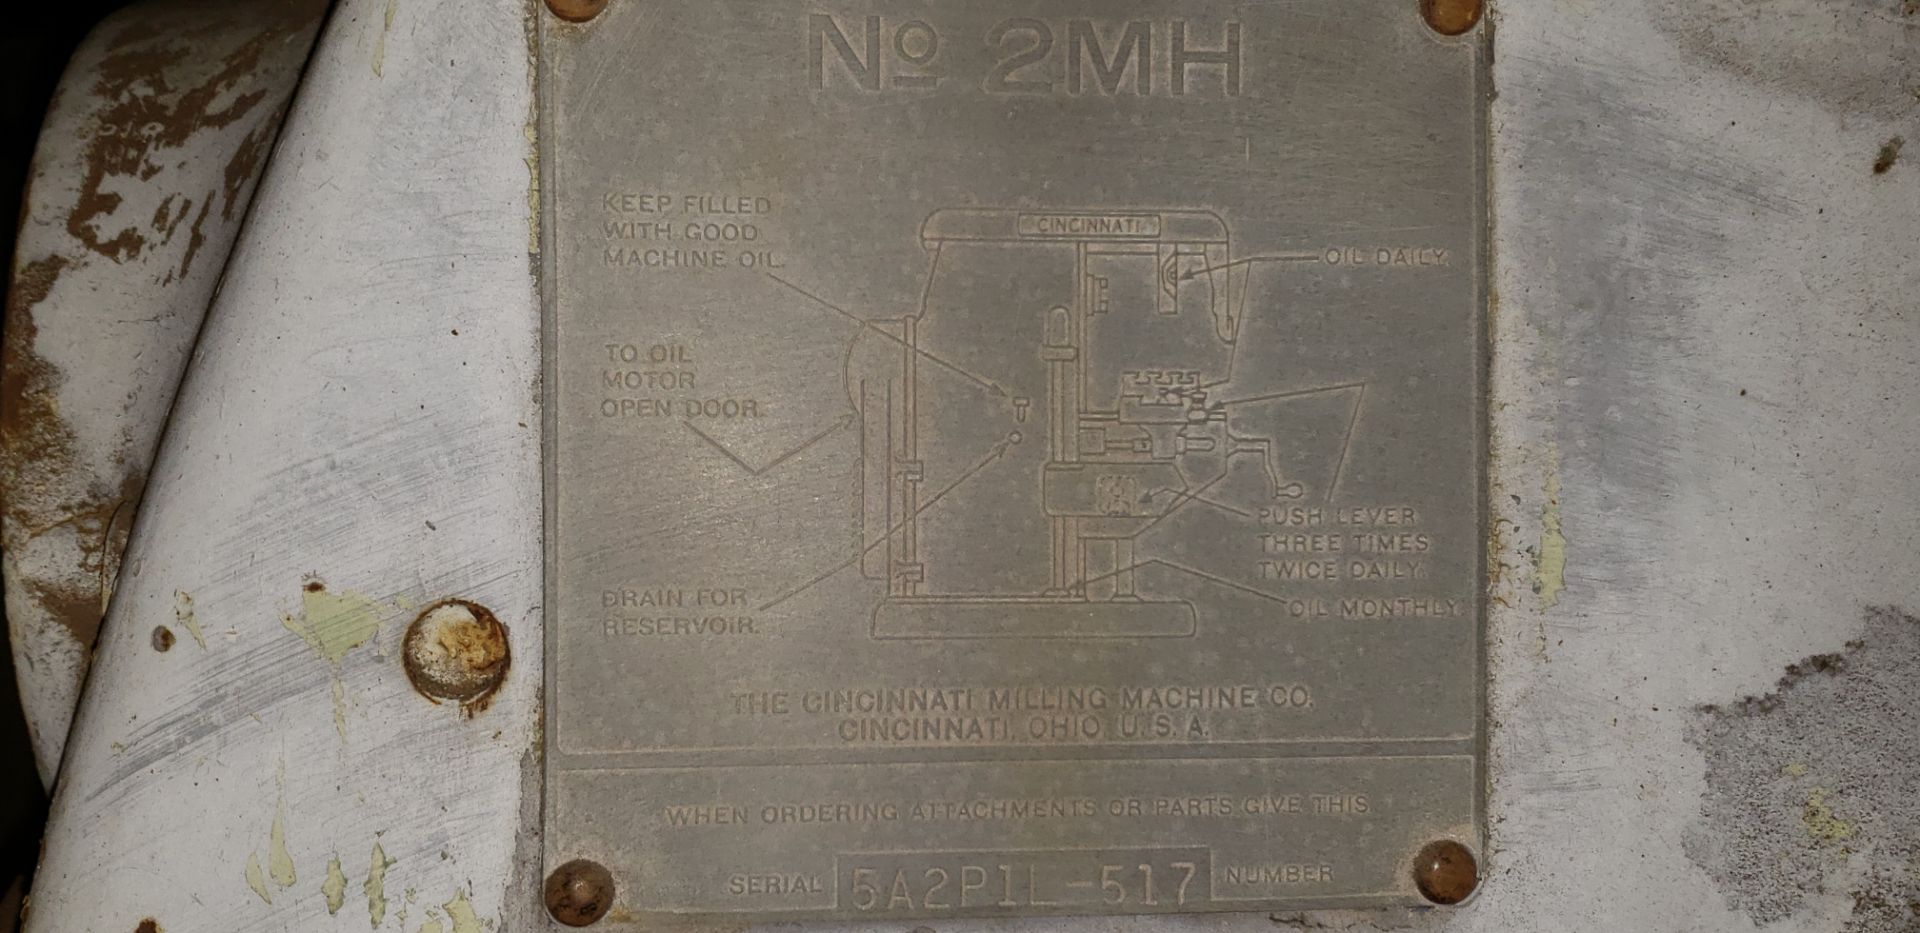 Cincinnati, Mdl: 2MH Horizontal Milling Machine, S/N: 5A2P1L-517, Located In: Riverside - Image 2 of 8